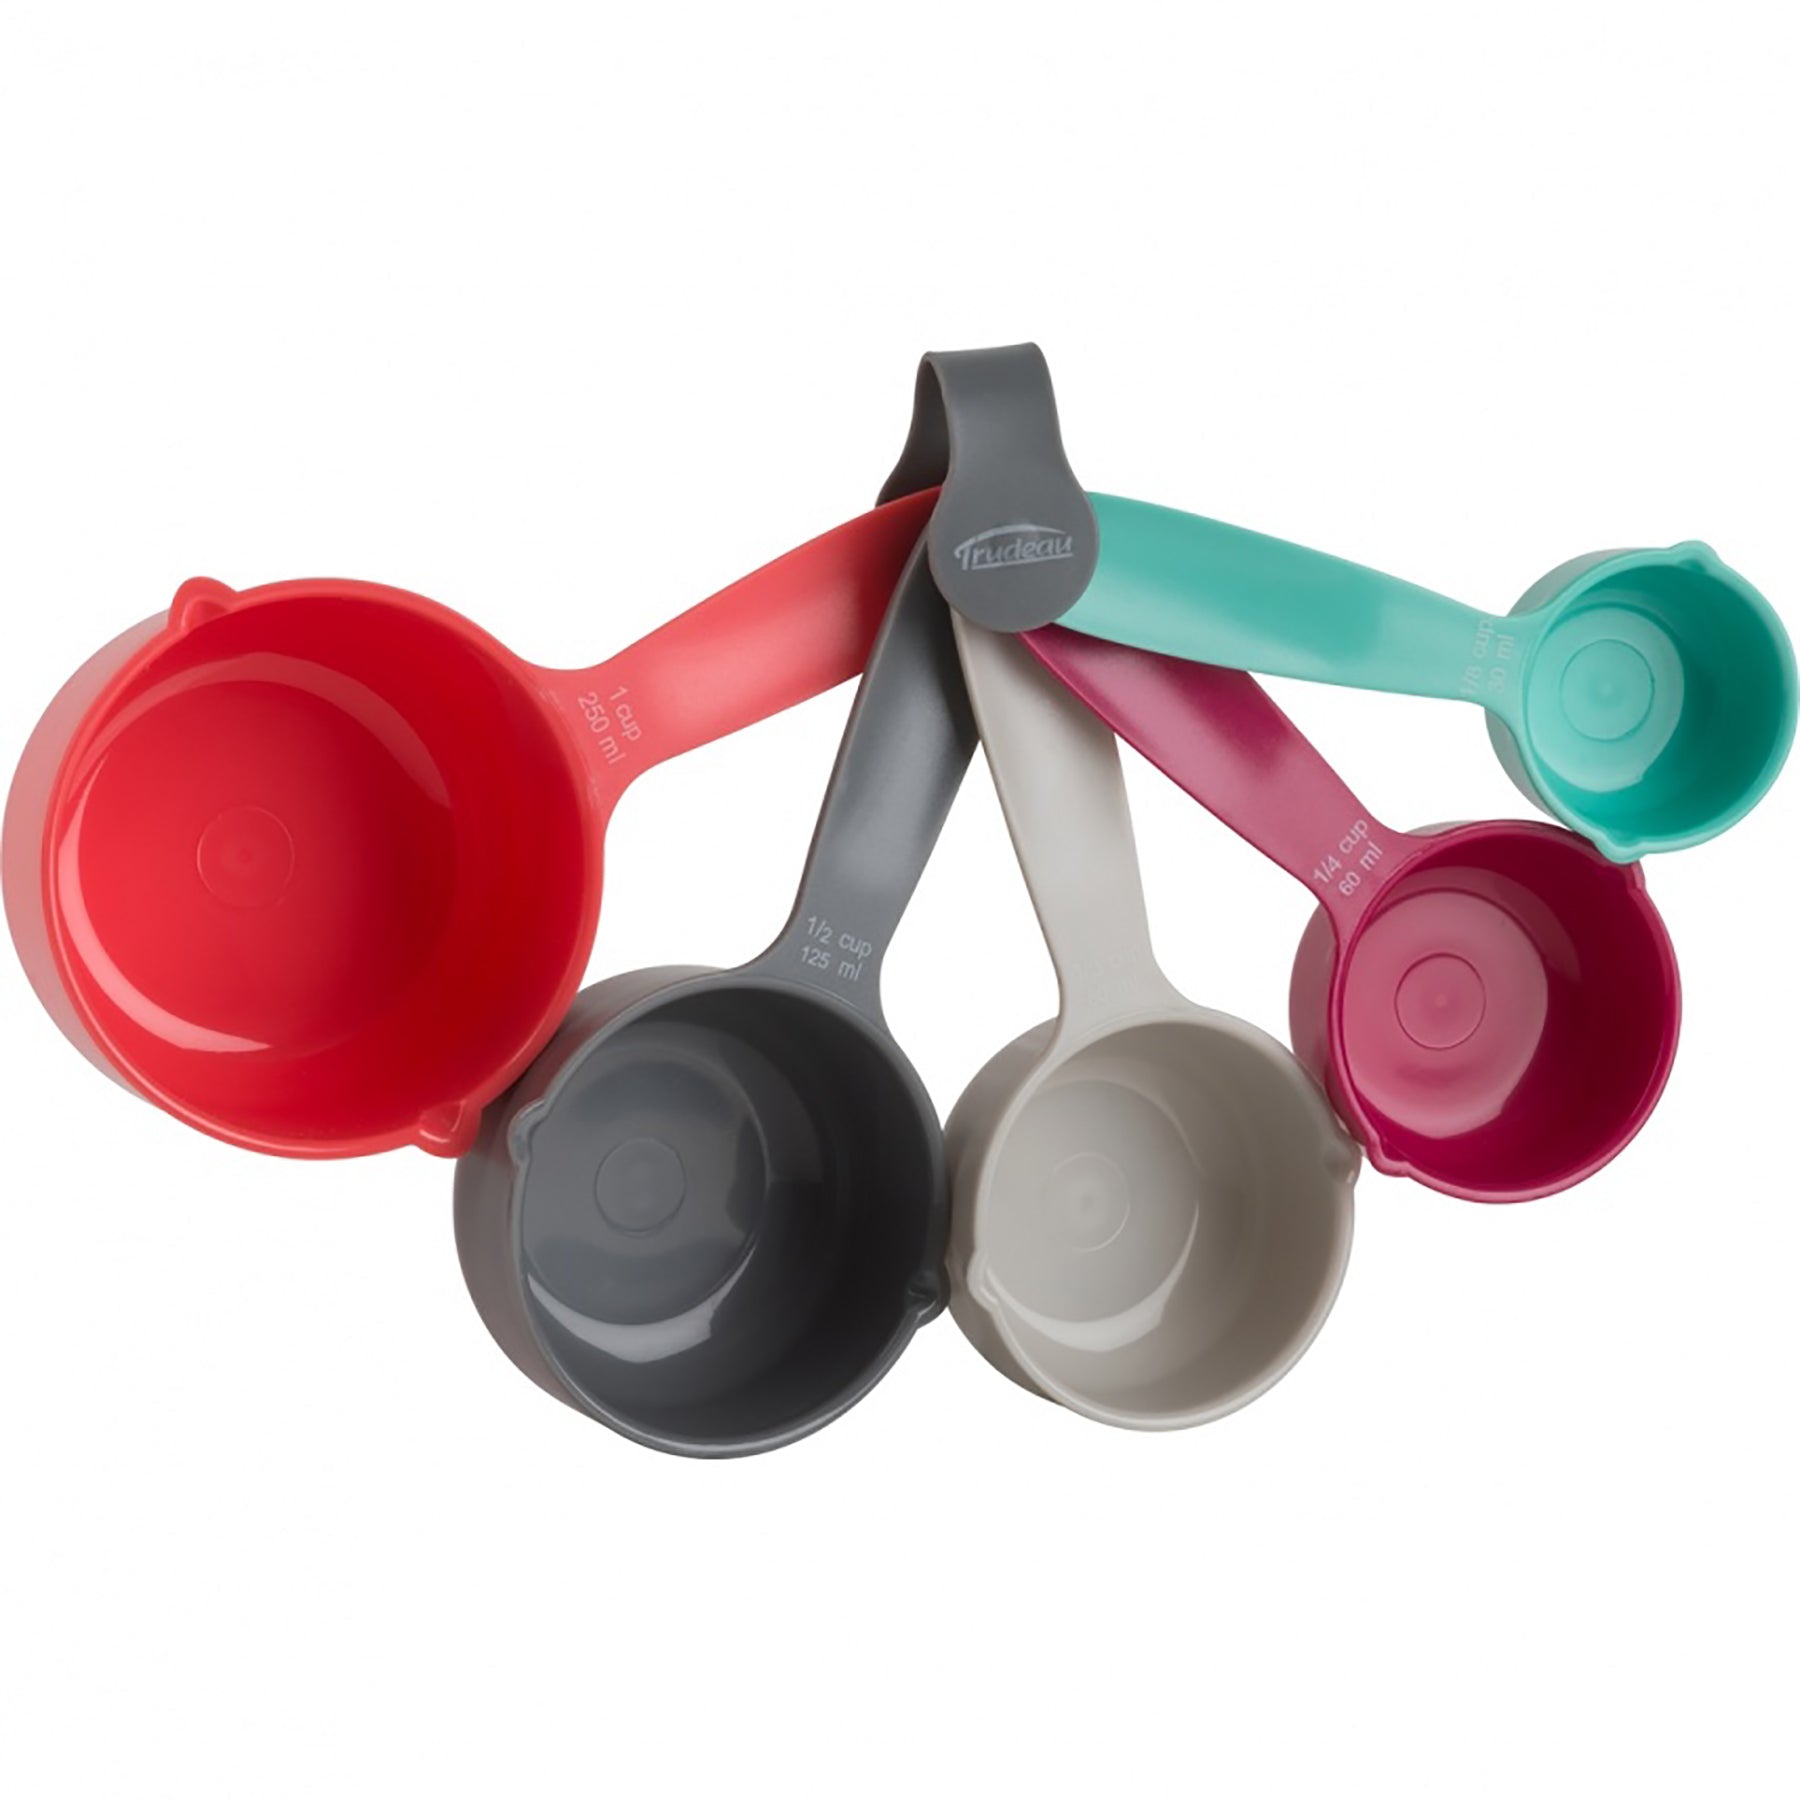 Trudeau 5pcs Measuring Cups Set Plastic BPA Free 1/8 to 1 Cup